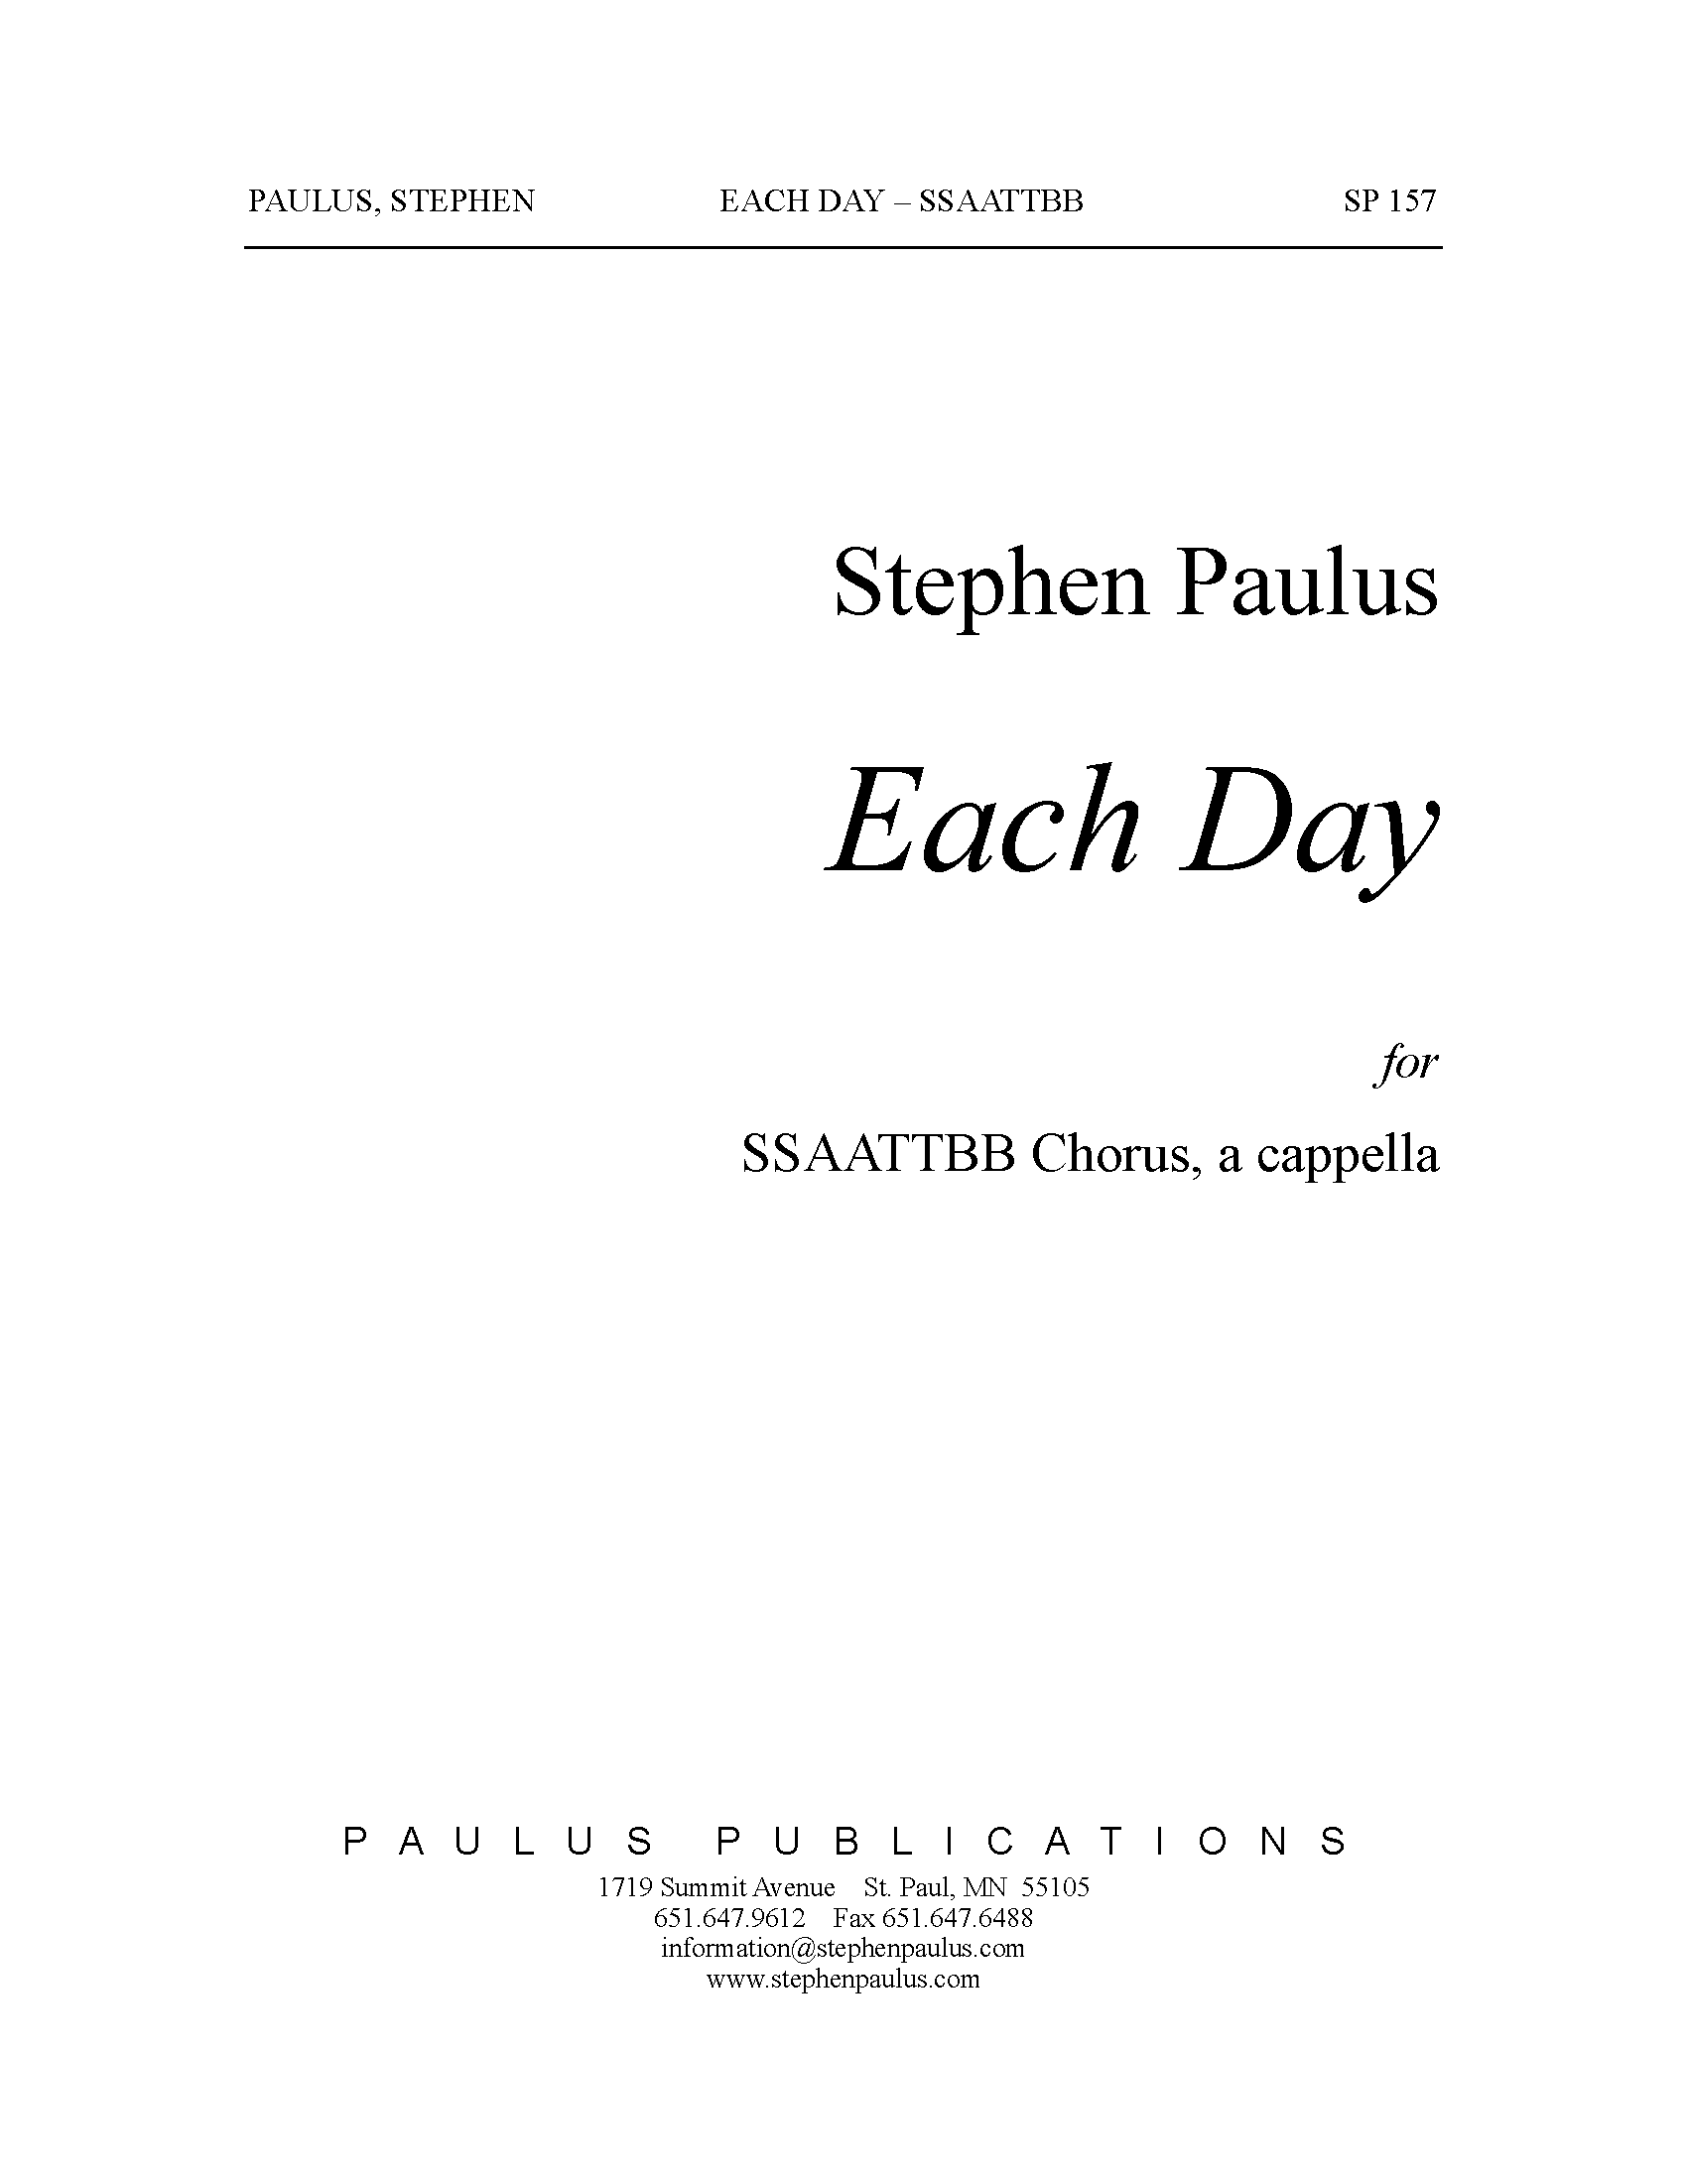 Each Day for SSAATTBB Chorus, a cappella